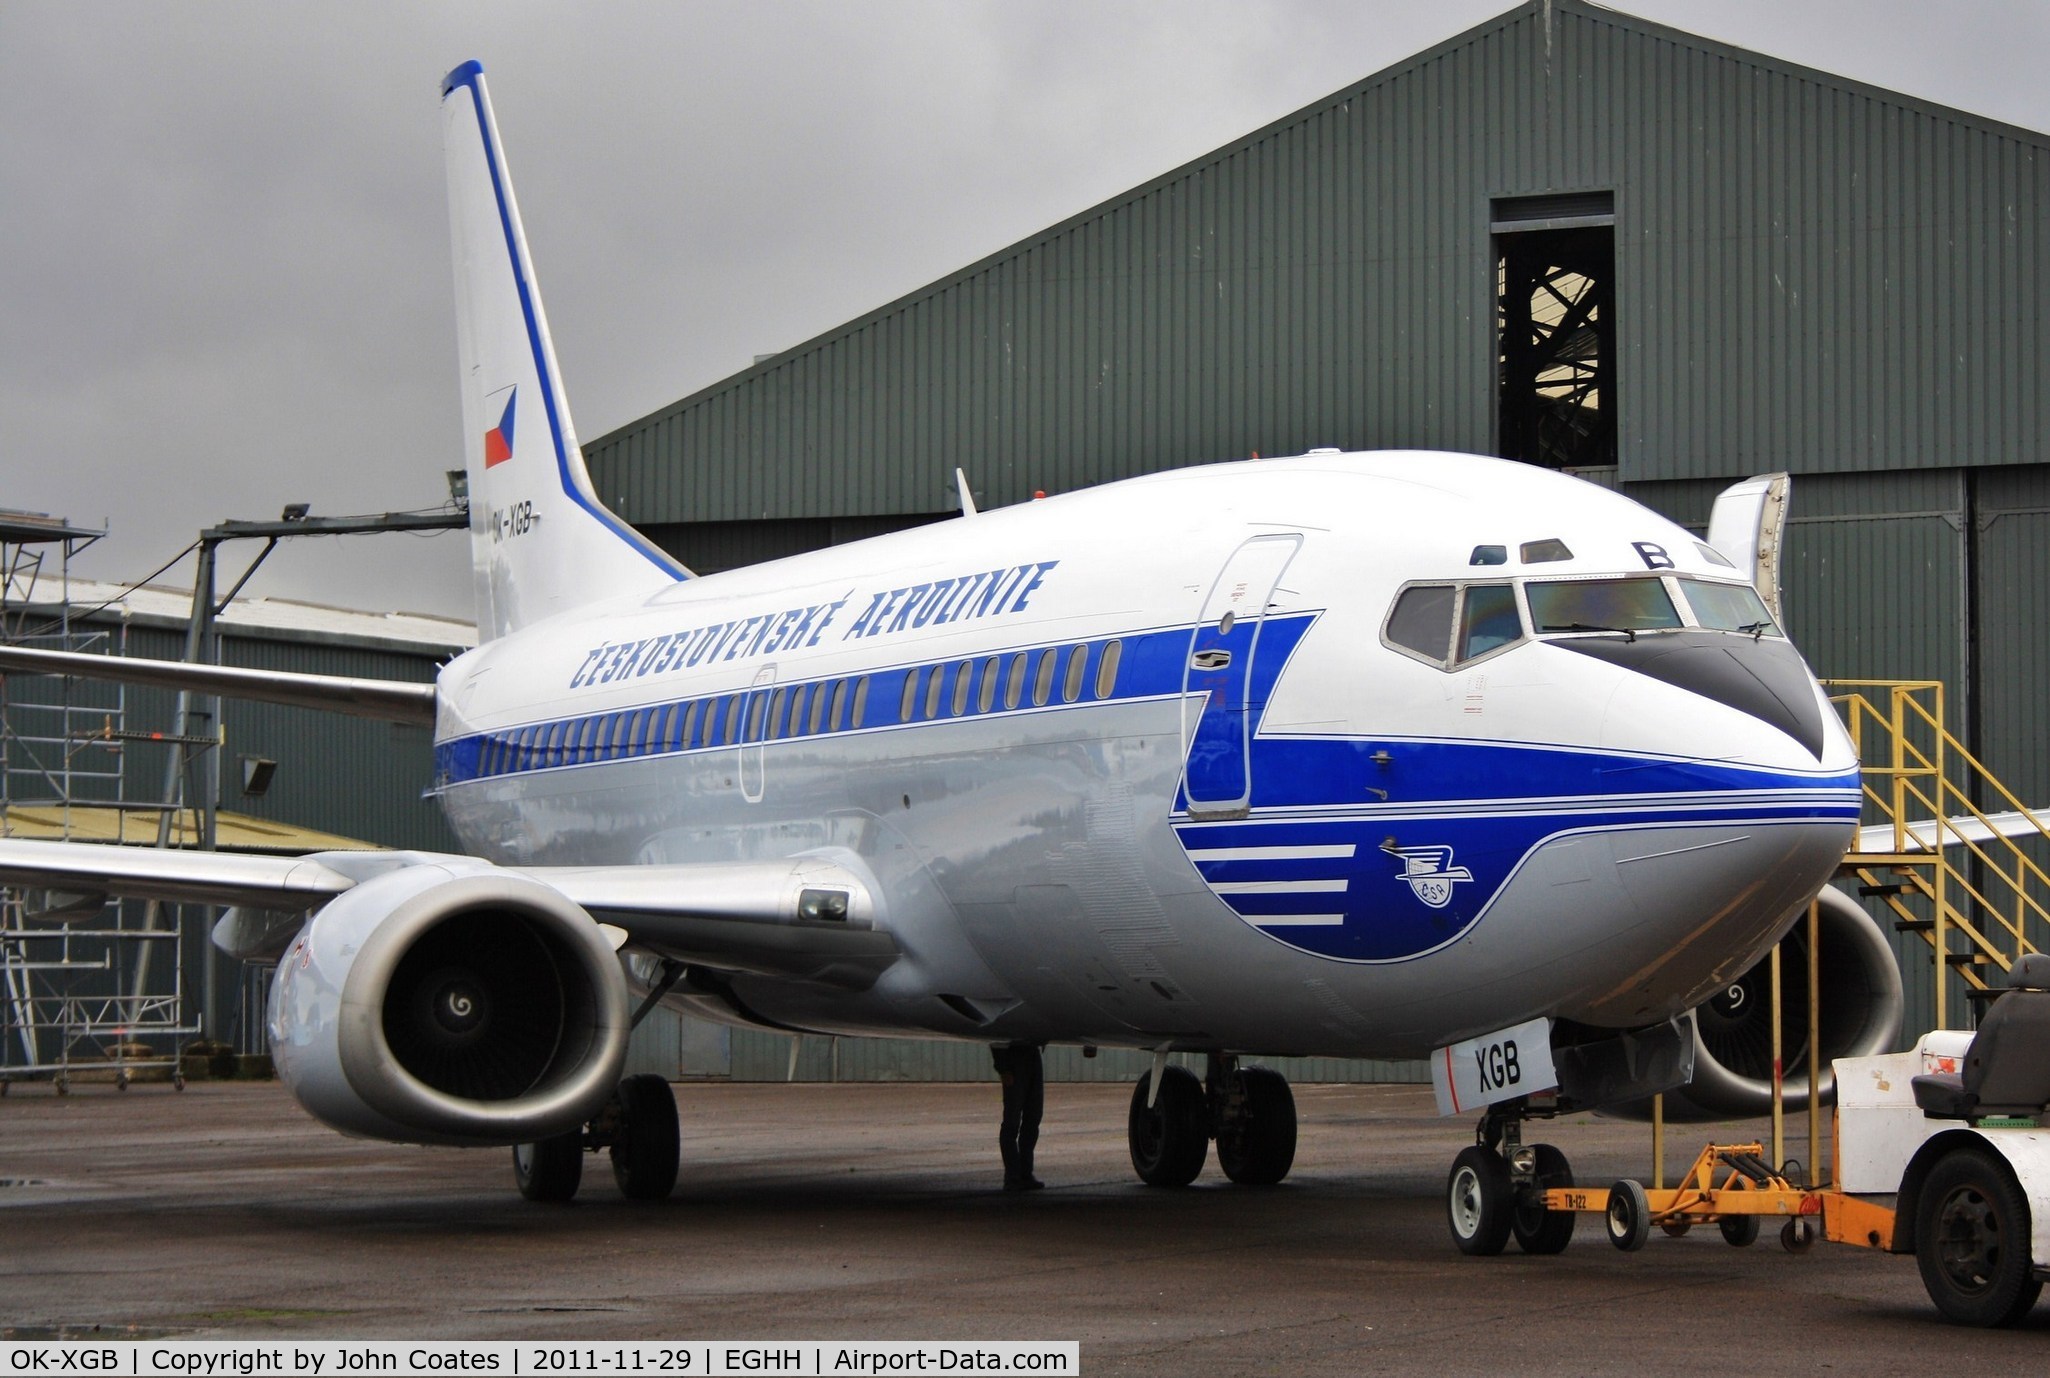 OK-XGB, 1992 Boeing 737-55S C/N 26540, Just repainted into retro scheme